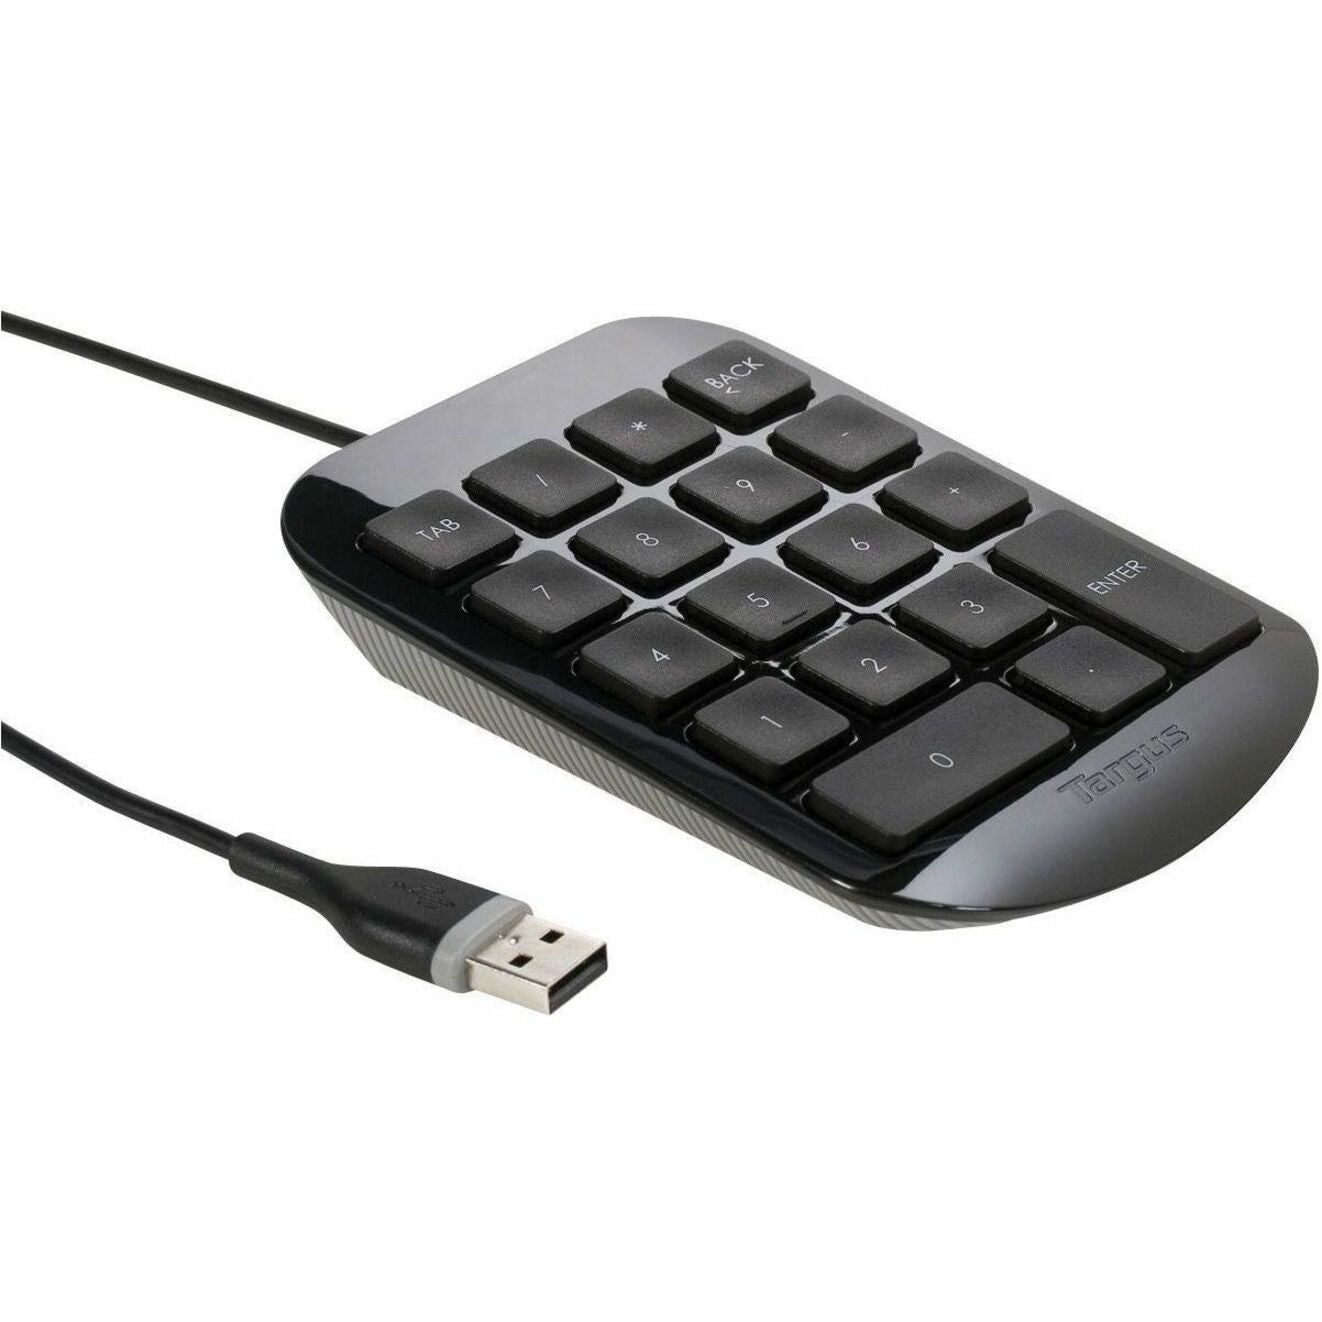 Targus AKP10US Numeric Keypad, USB Ergonomic Keypad for PC and Mac